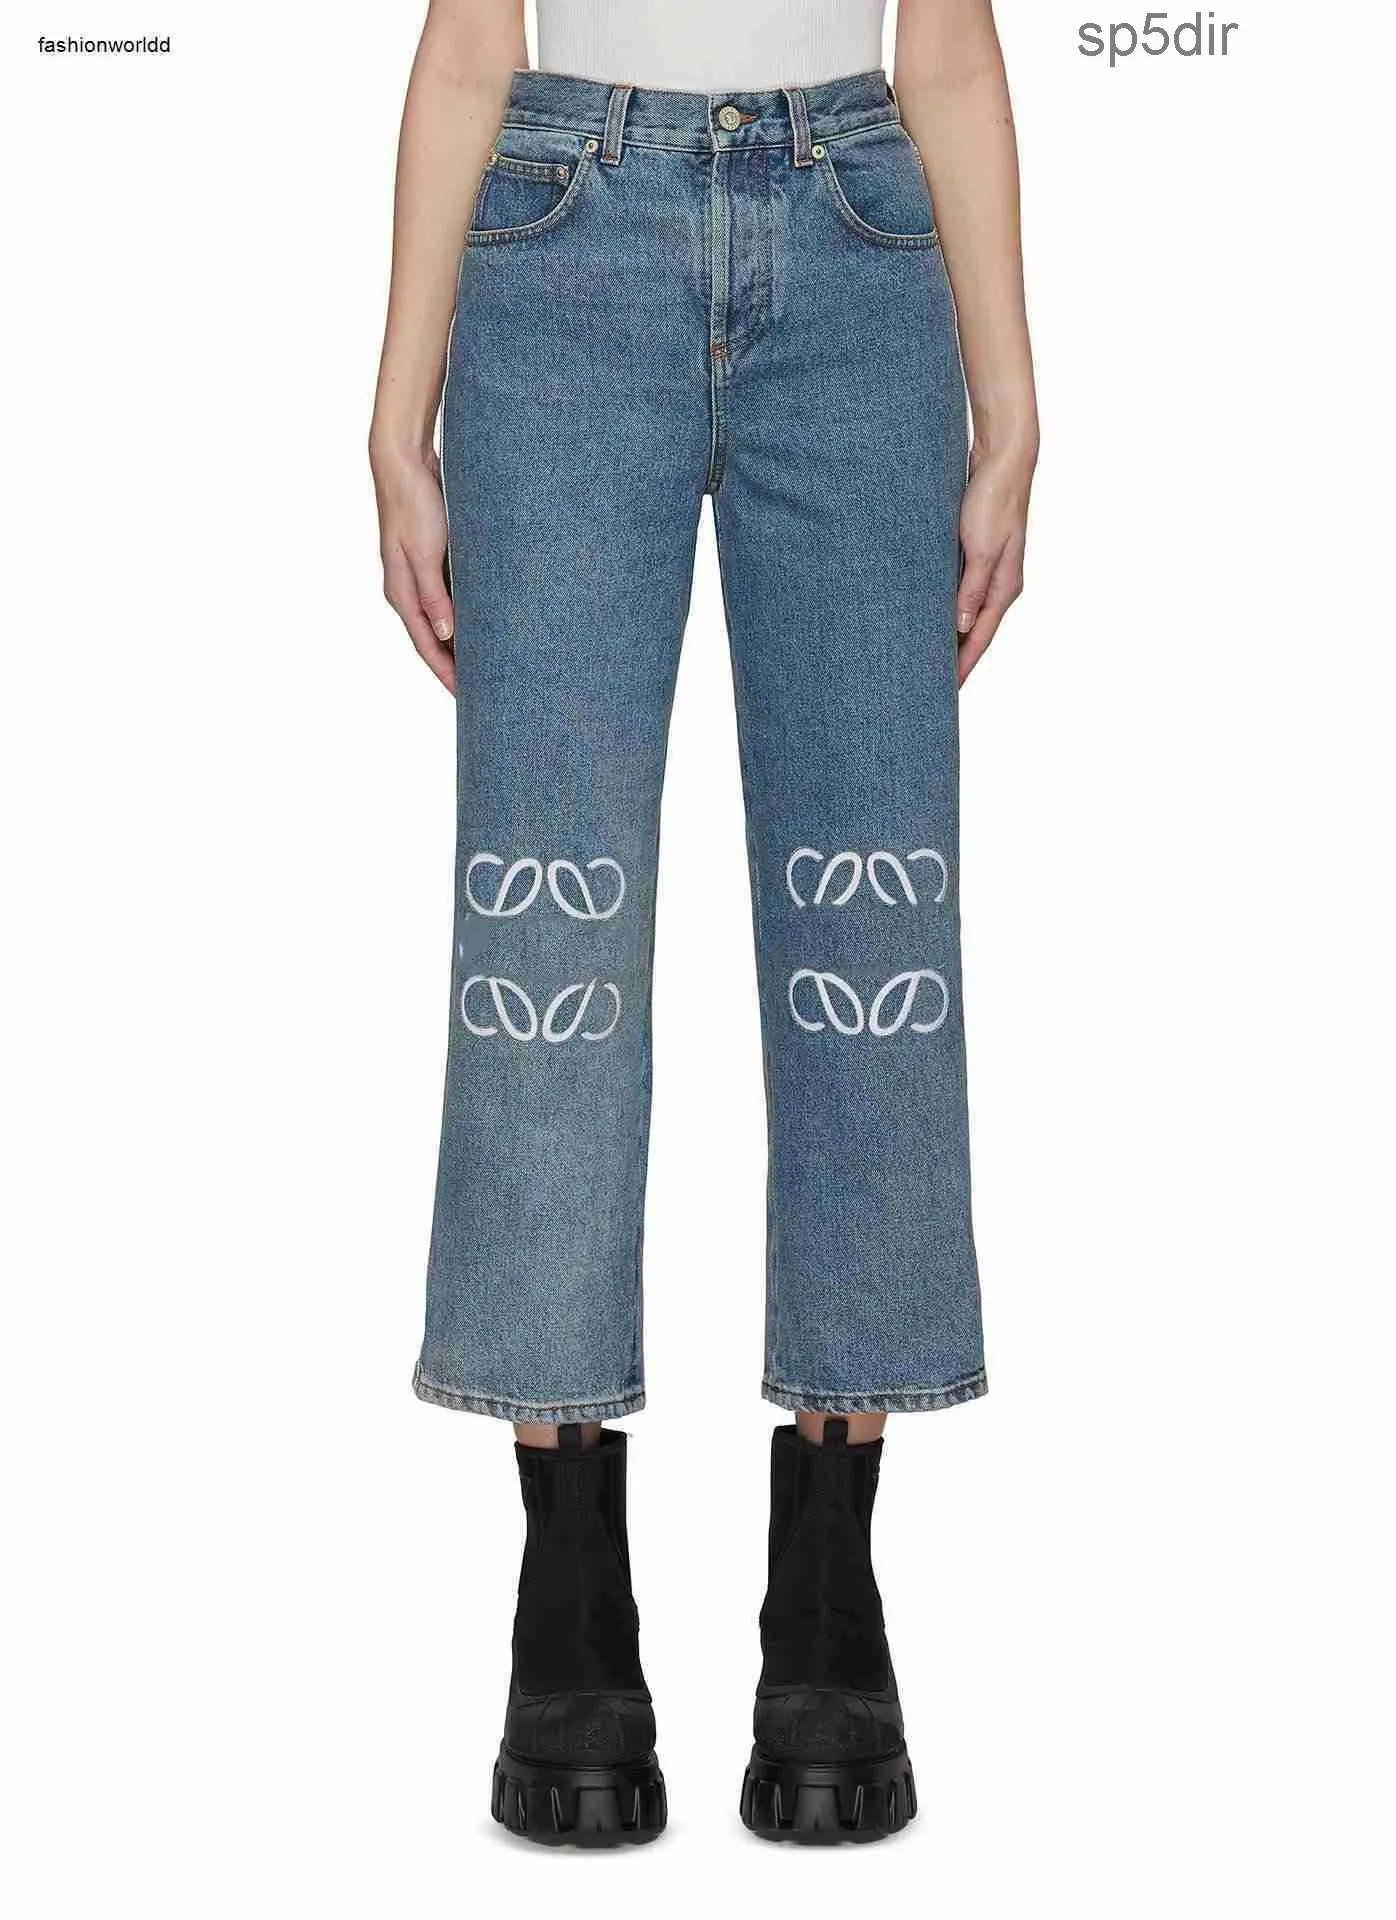 Designer Jean Femmes Jeans Brand Pantalon Fashion Logo Fashion Printing Girl Crayon Denim Capris Tableau 30 déc. IEWH